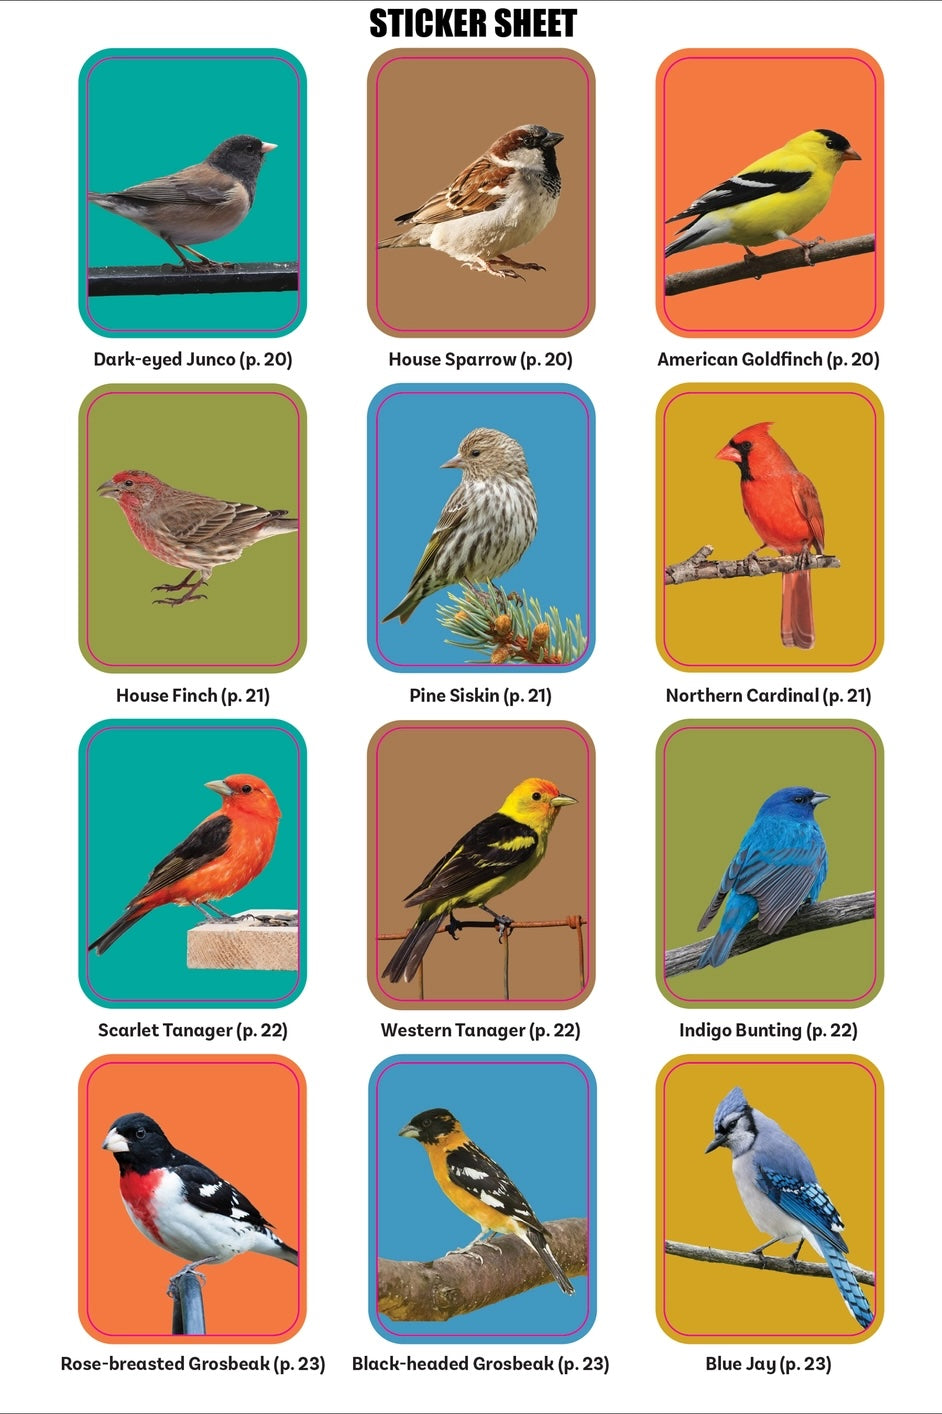 Birders Logbook Seek and Sticker Book for Budding Orinthologists - Tortuna